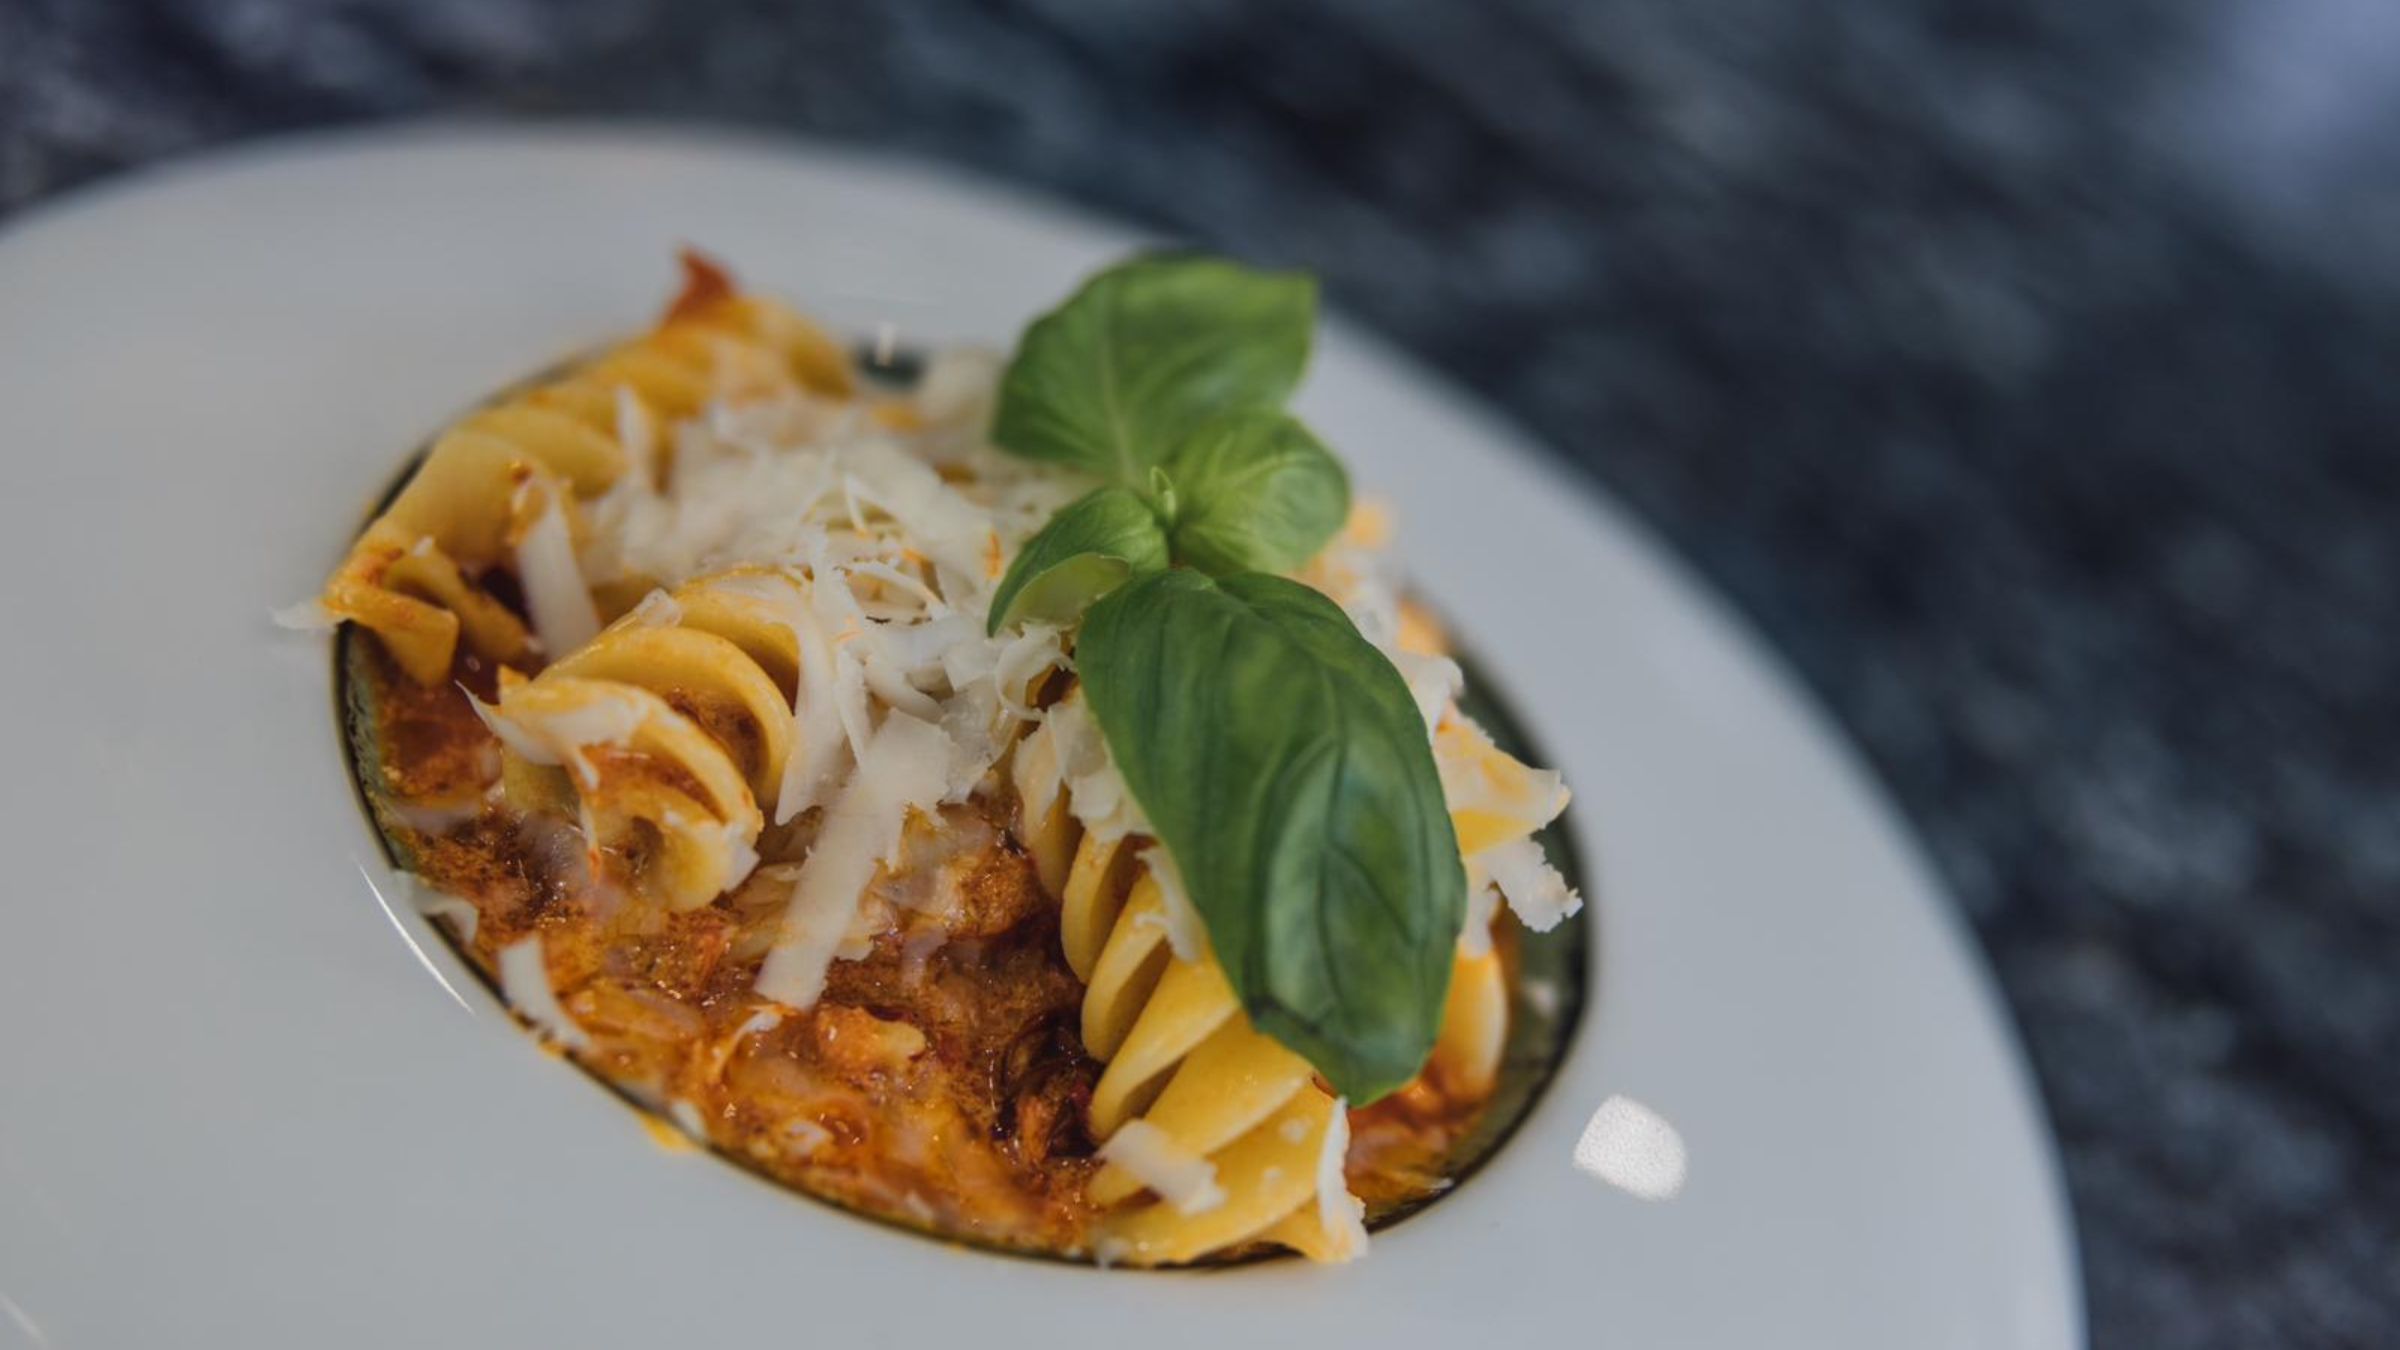 La recette du week-end : Pasta avec pomodorini, mascarpone e ‘nduja